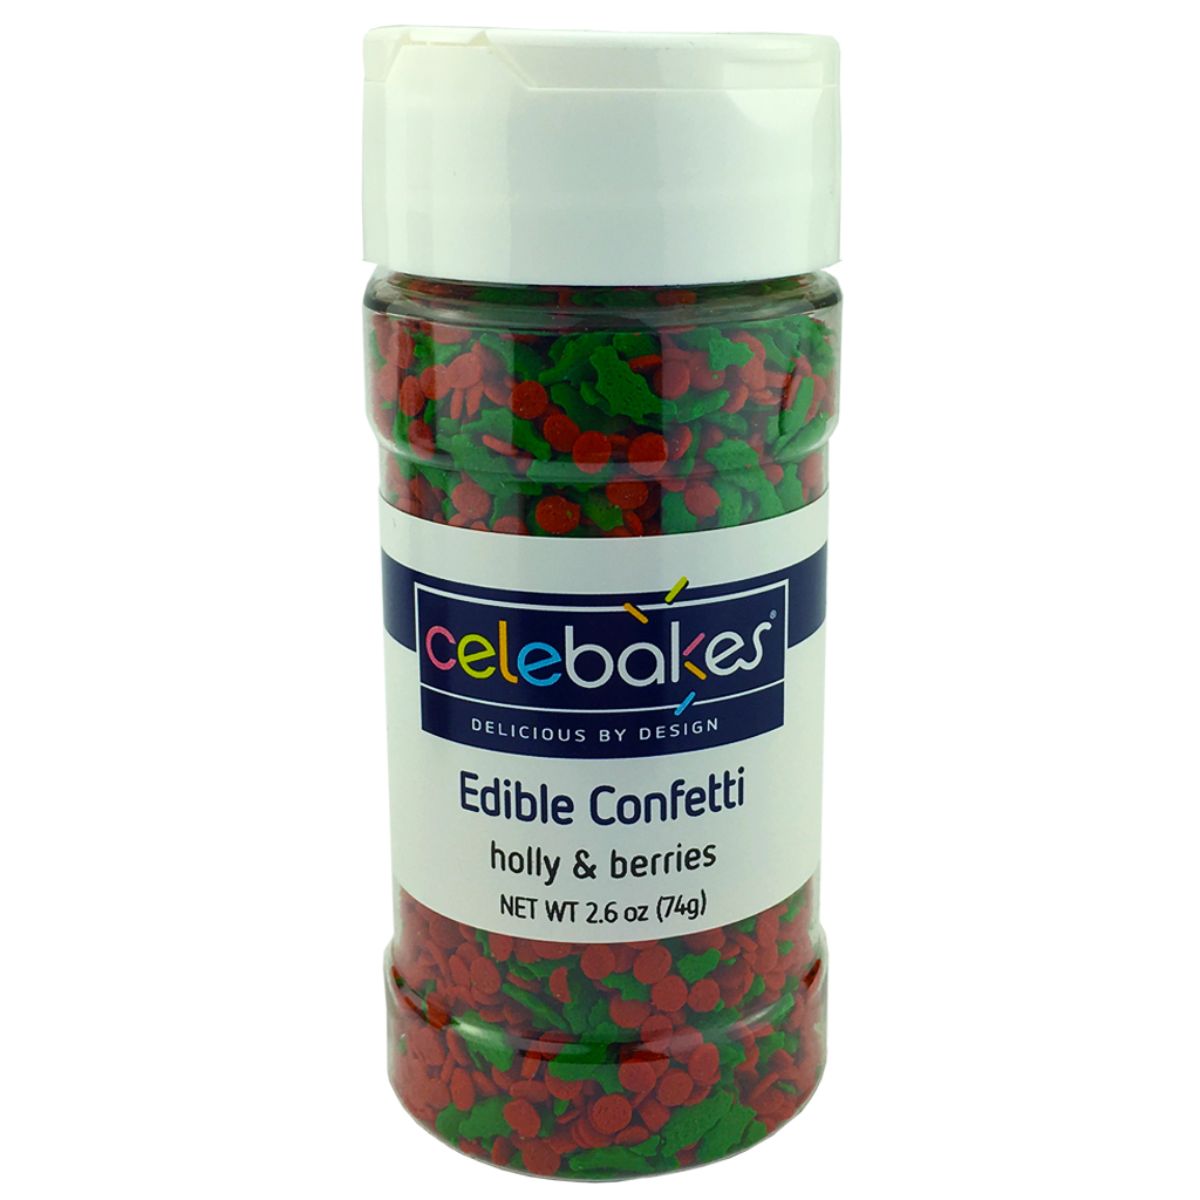 CK Edible Confetti Holly & Berries 2.6oz